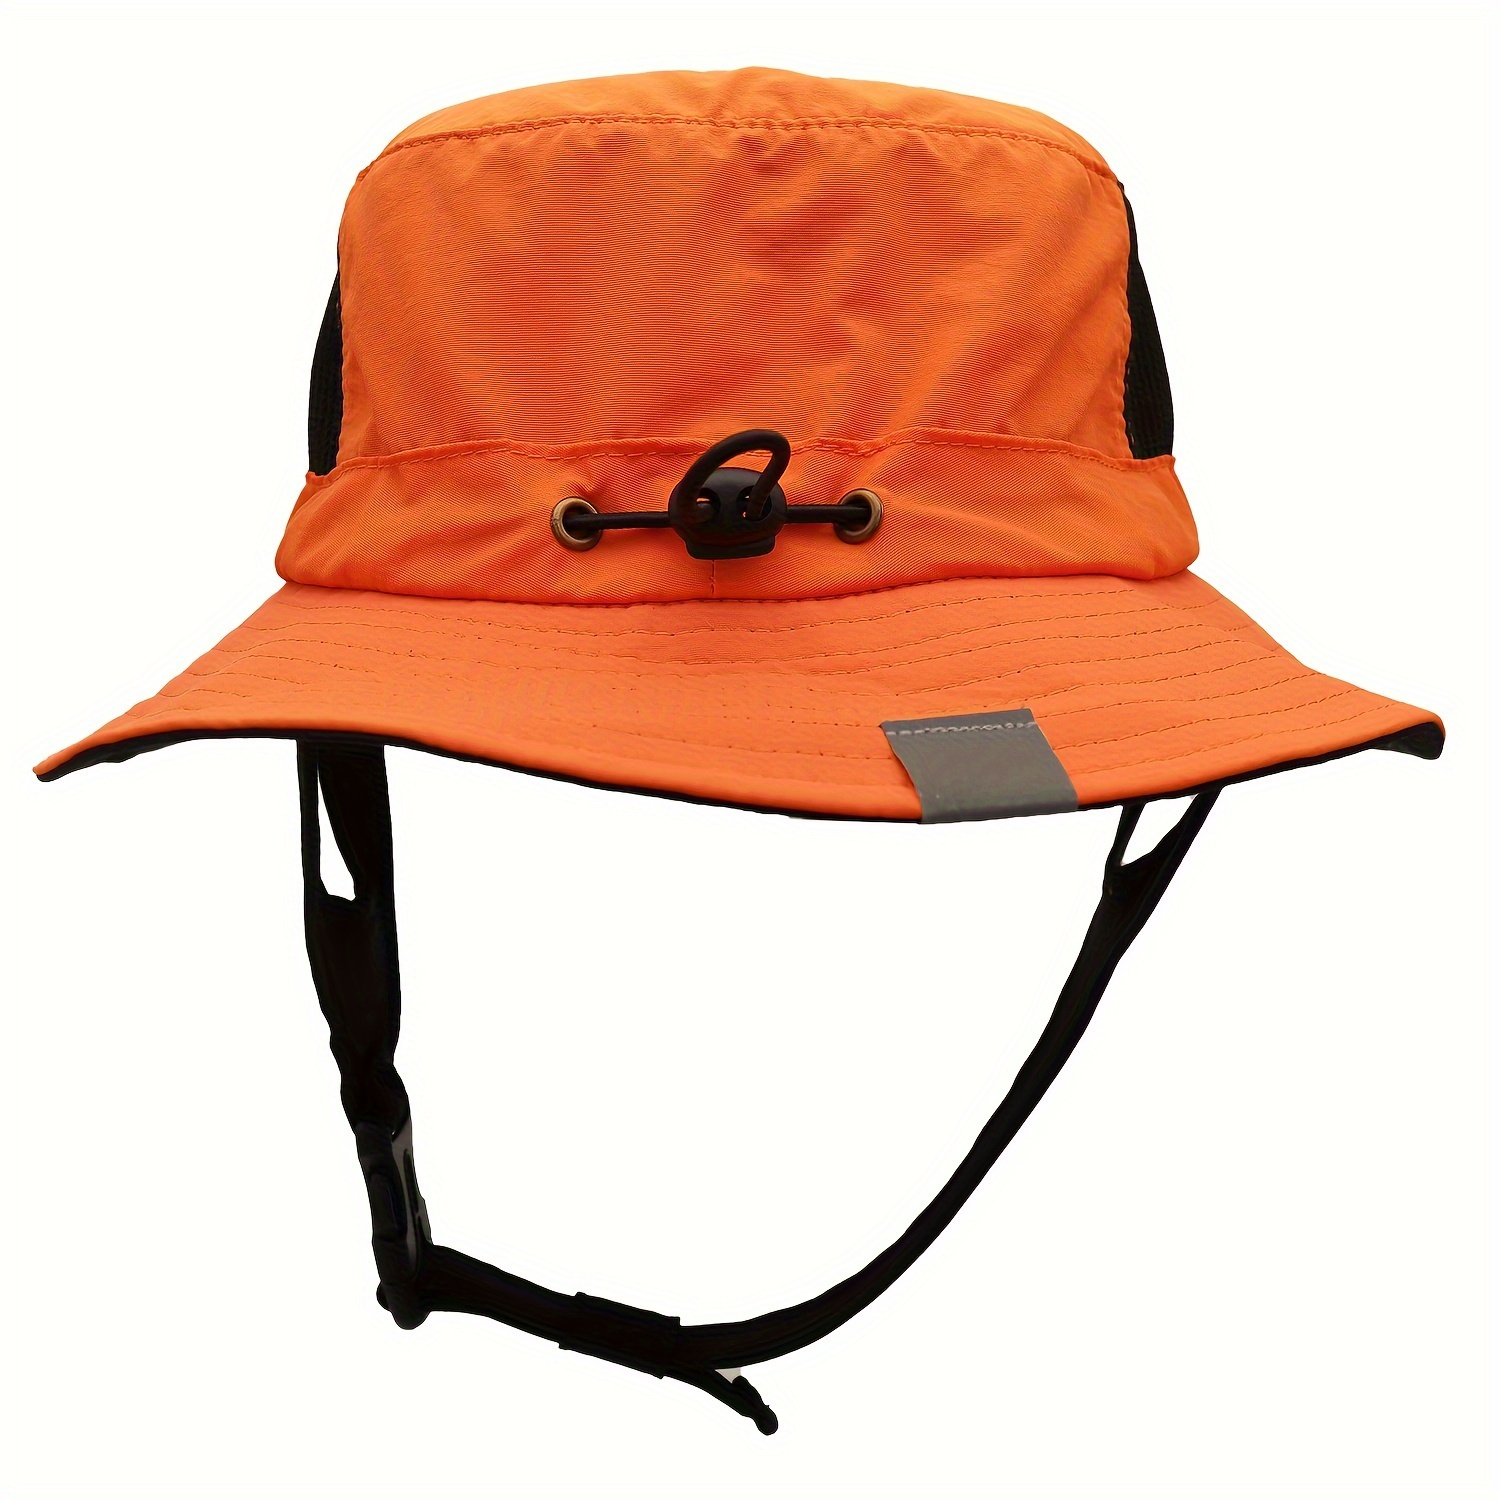  JOLUCE Men's UPF 50+ Safari Hat, Wide Brim Sun Protection  Hat, Farm Work, Fishing Hat, orange : Sports & Outdoors